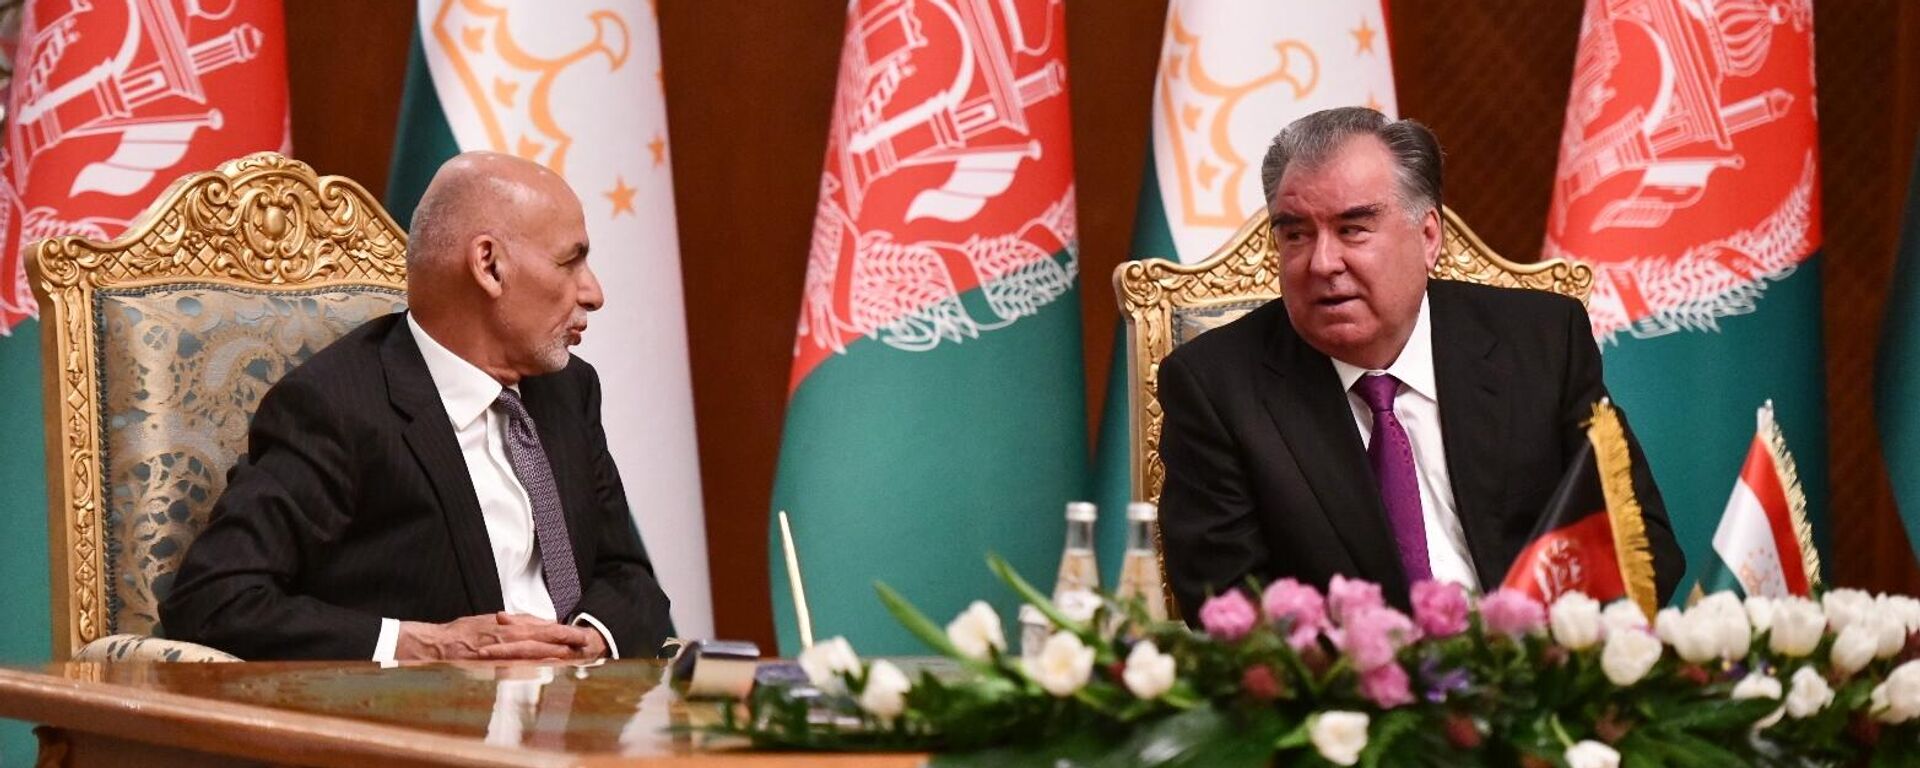 Президент Таджикистана Эмомали Рахмон (справа) и президент Афганистана Мухаммад Ашраф Гани - Sputnik Узбекистан, 1920, 31.03.2021